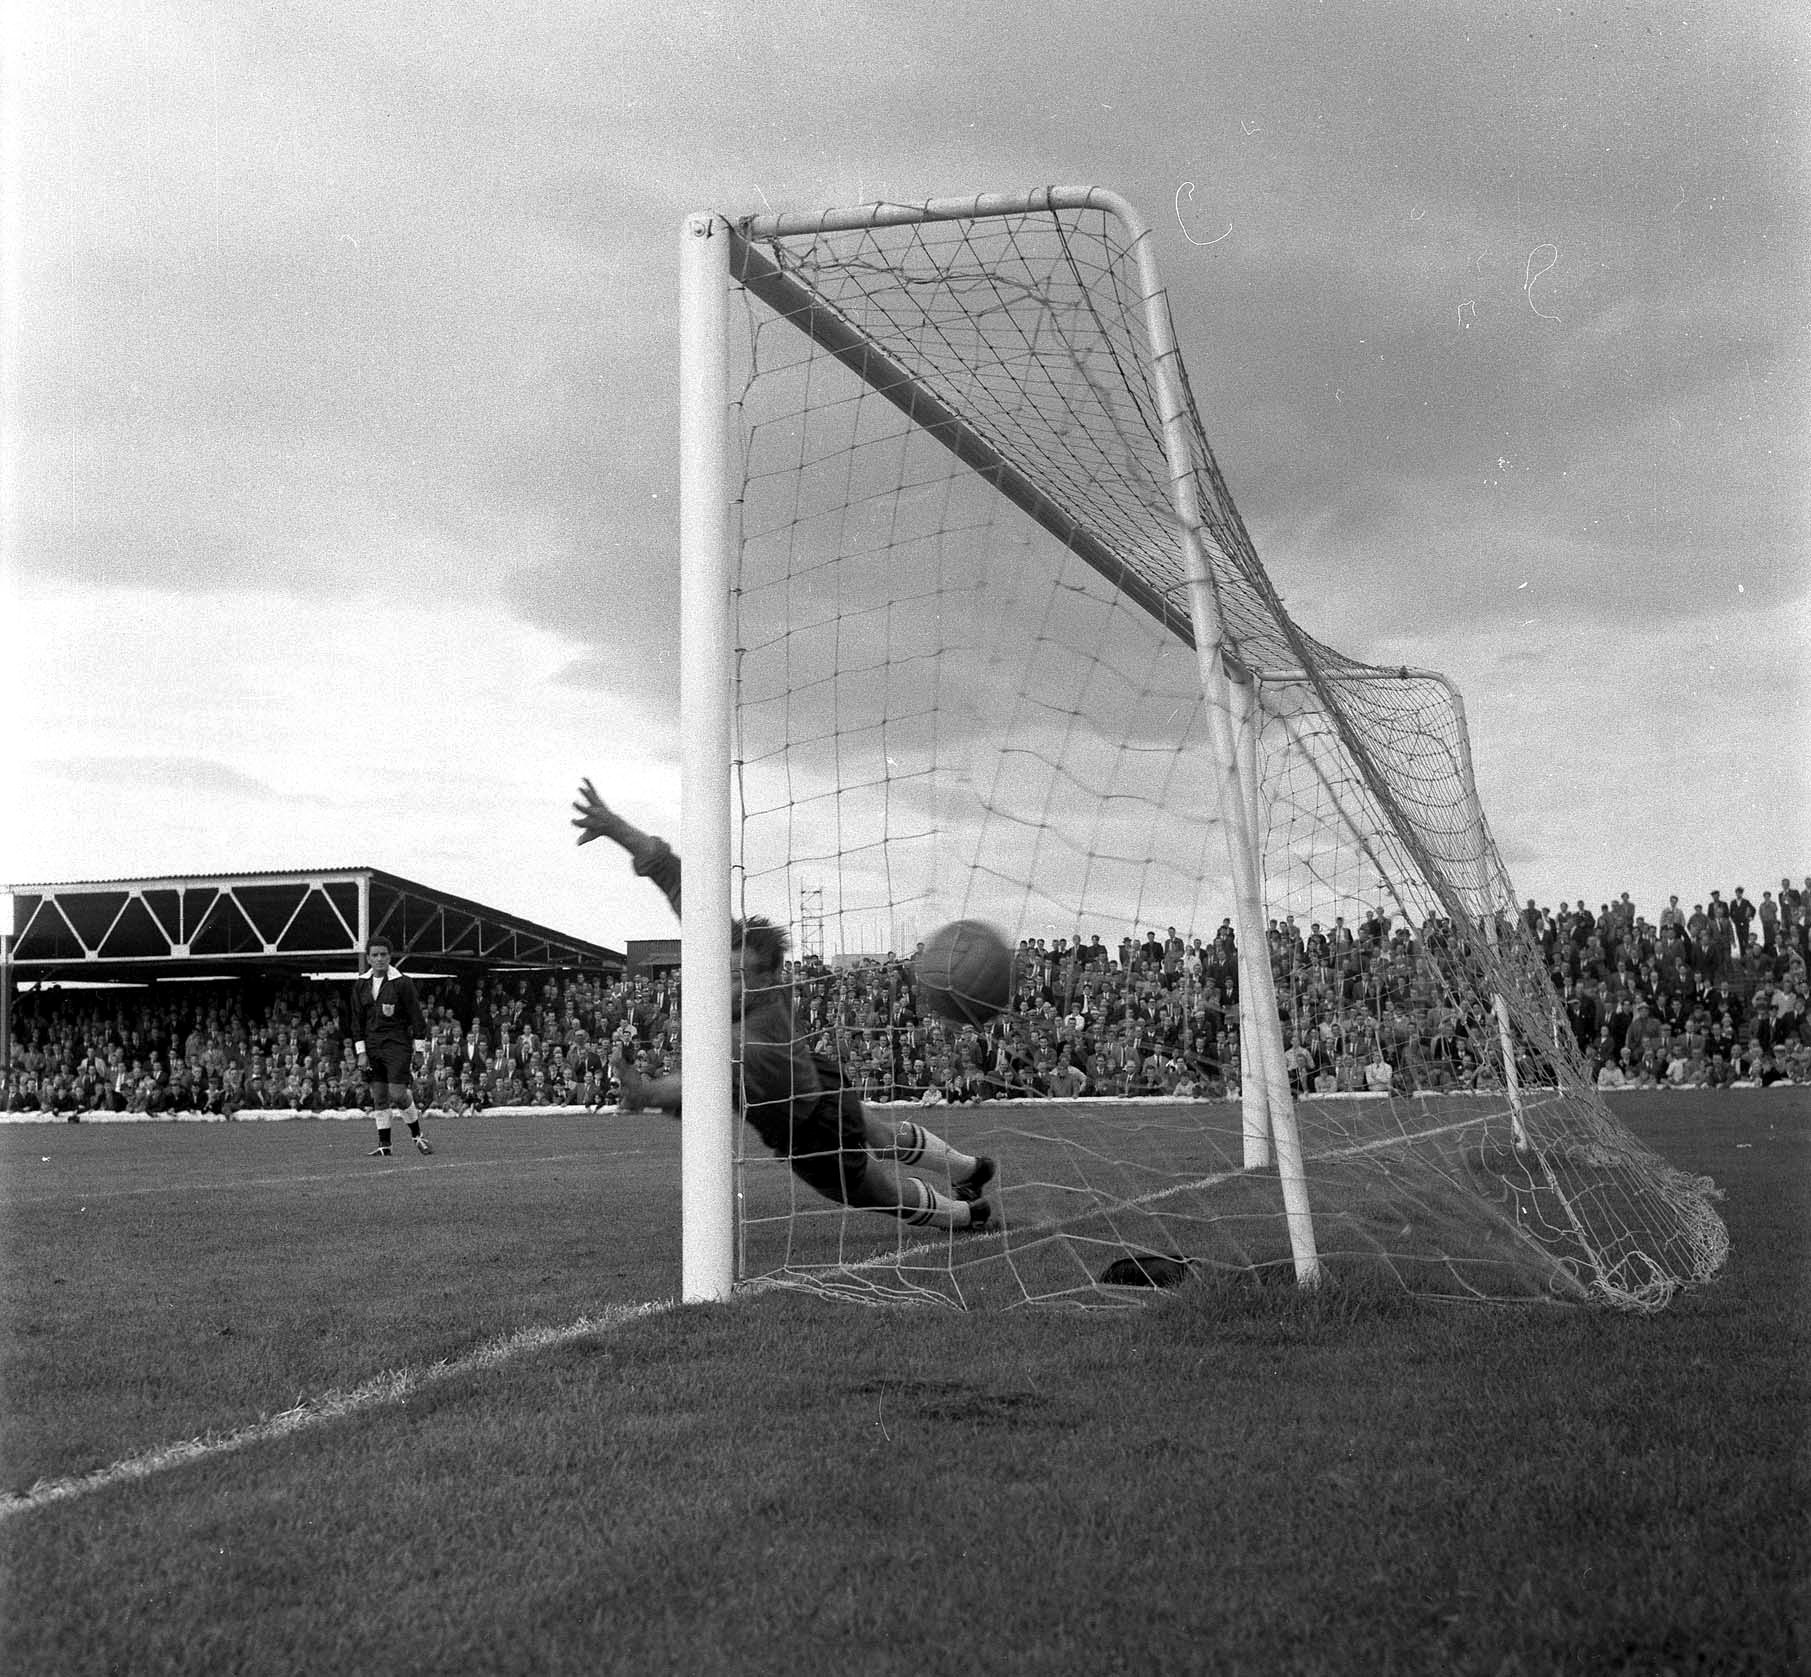 Goal at the Wrexham FC v Notts County game, 1964.